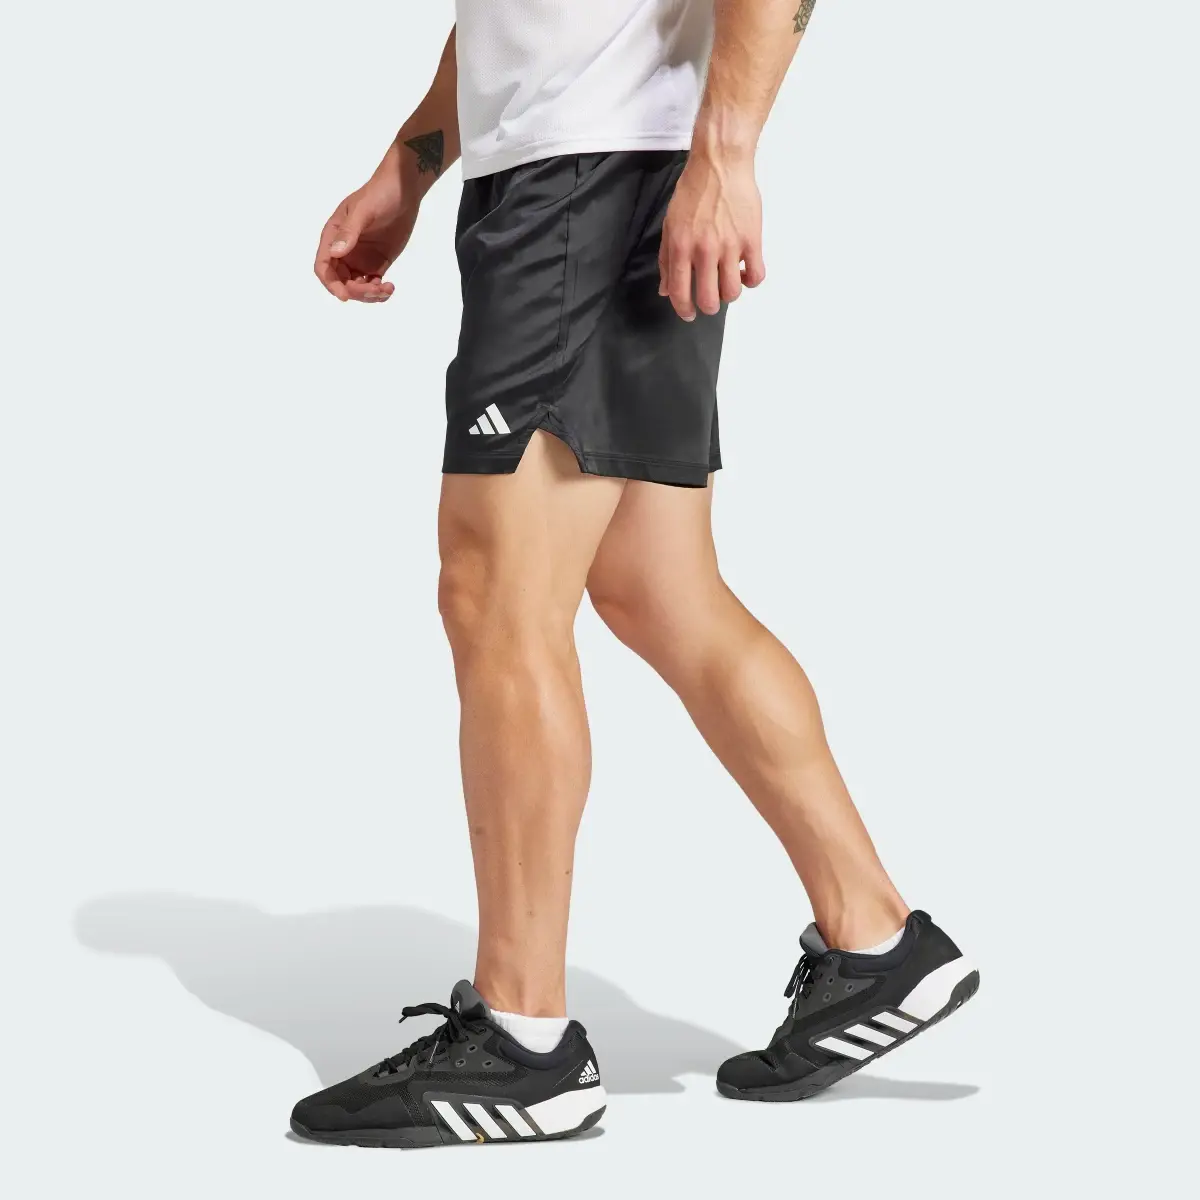 Adidas Power Workout Shorts. 2